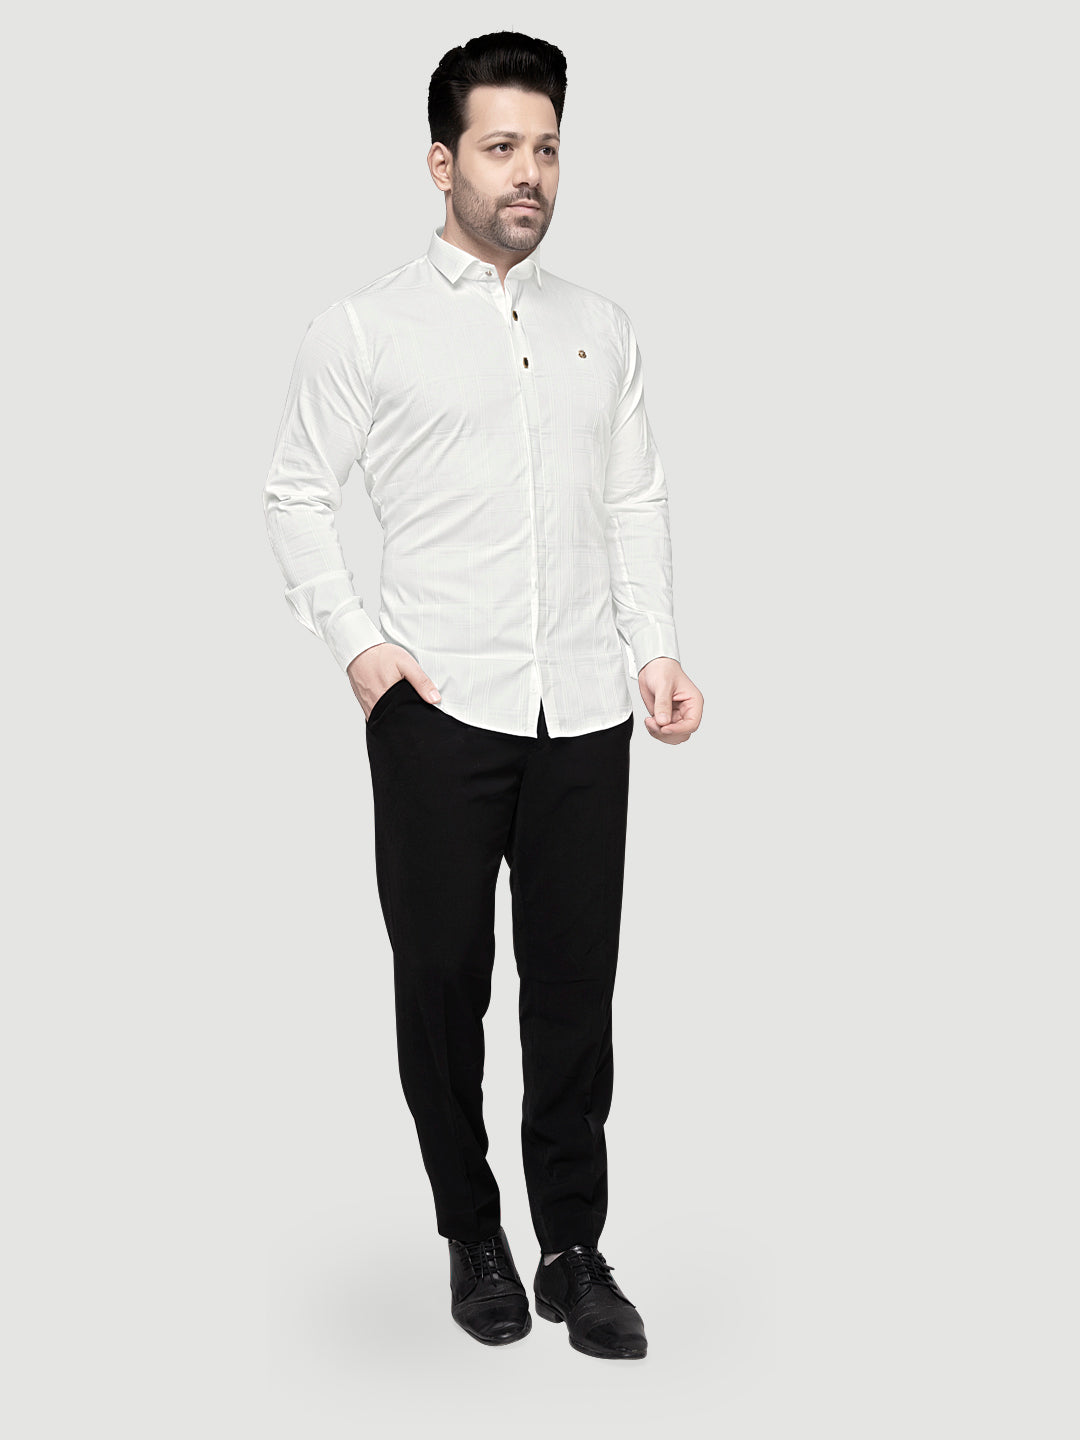 Designer Shirts with Collar Accessories- White